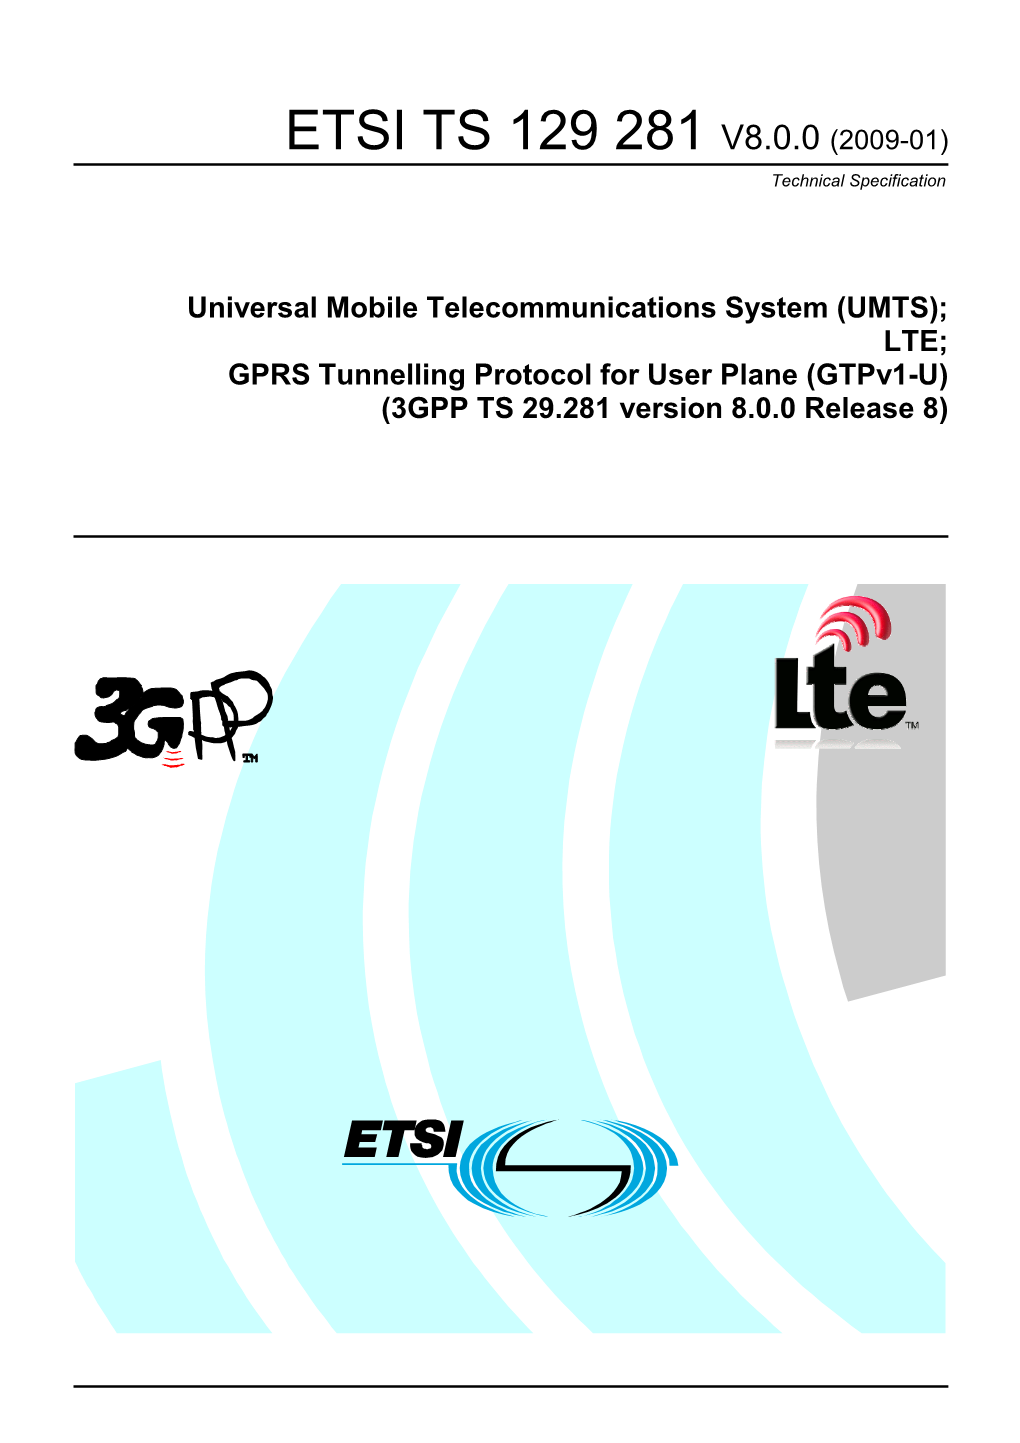 TS 129 281 V8.0.0 (2009-01) Technical Specification